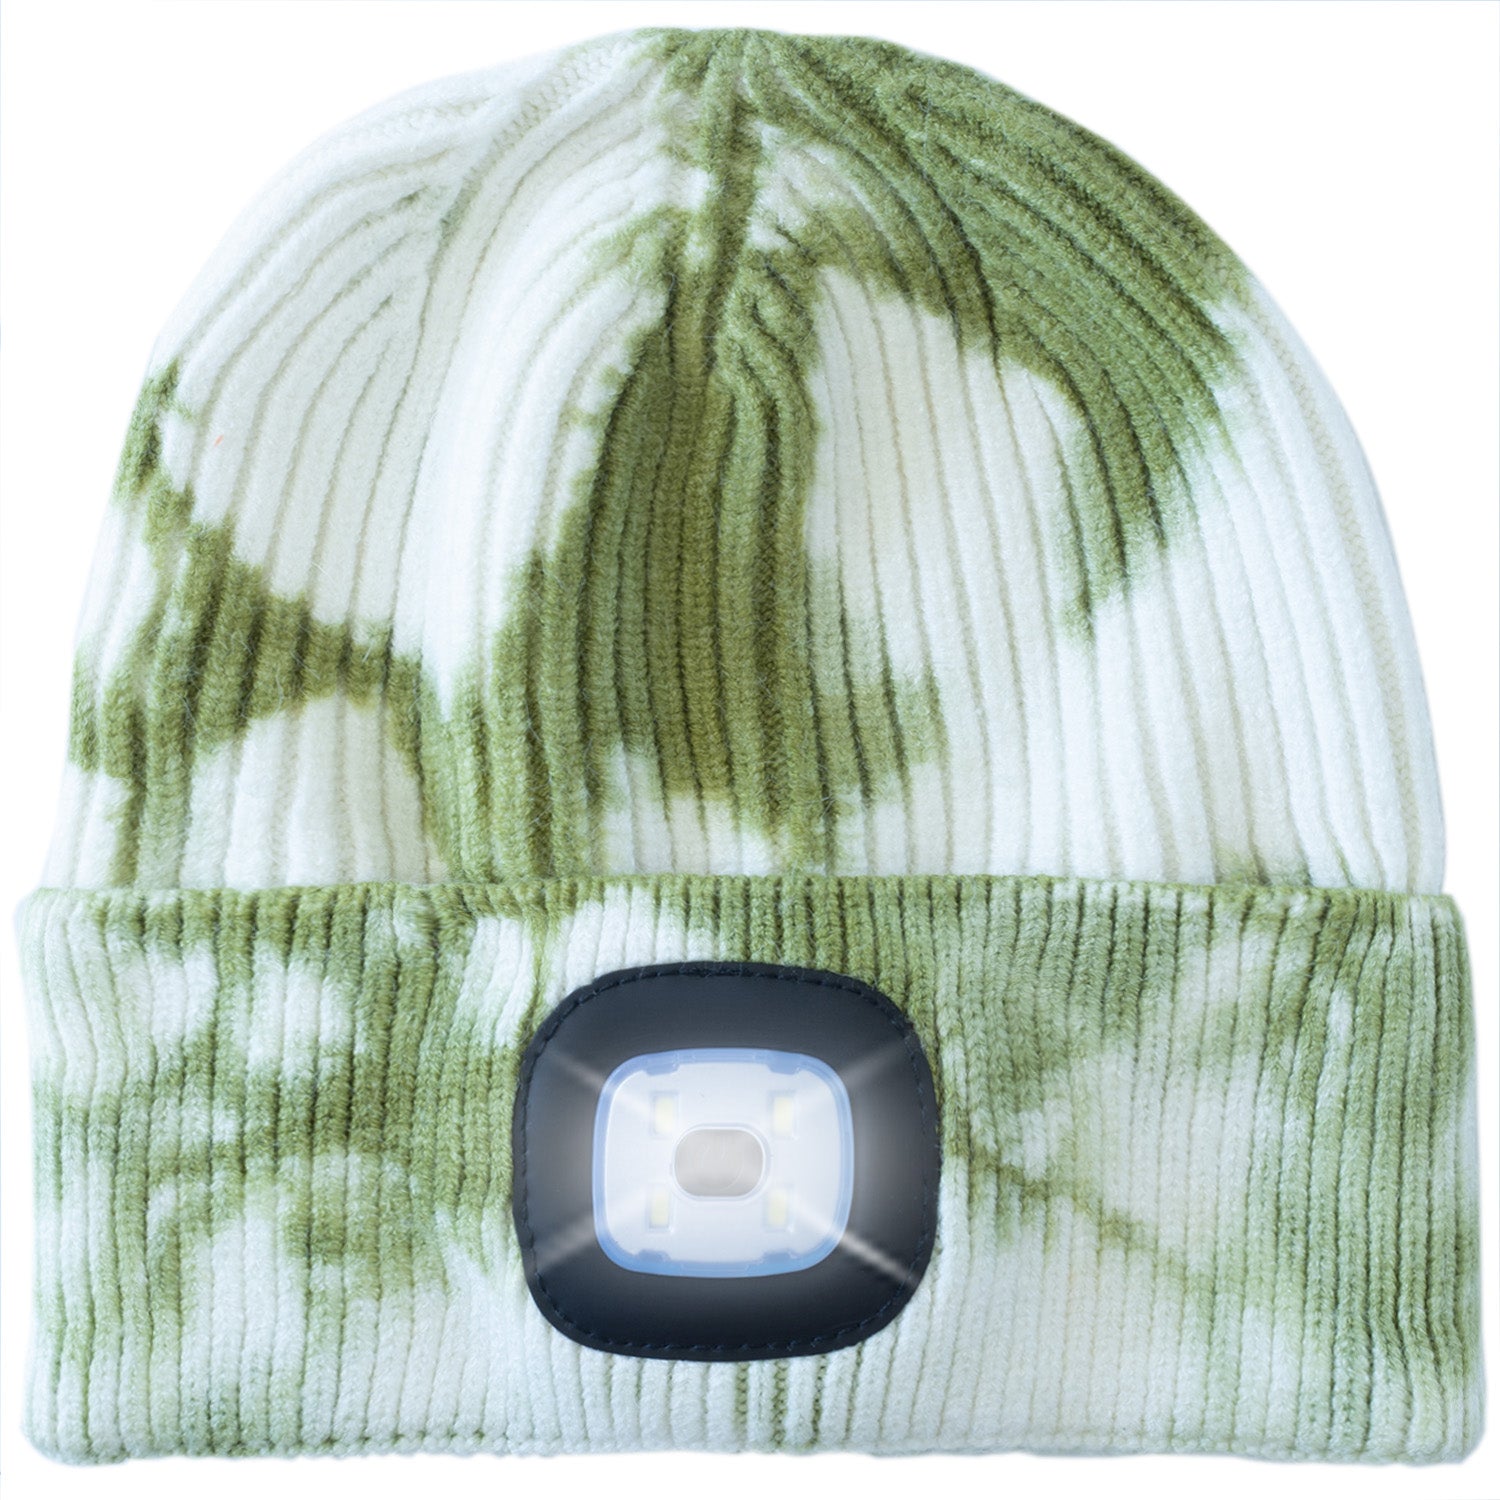 Headlightz® Beanie - Knit - Tie Dye Green – Roq Innovation